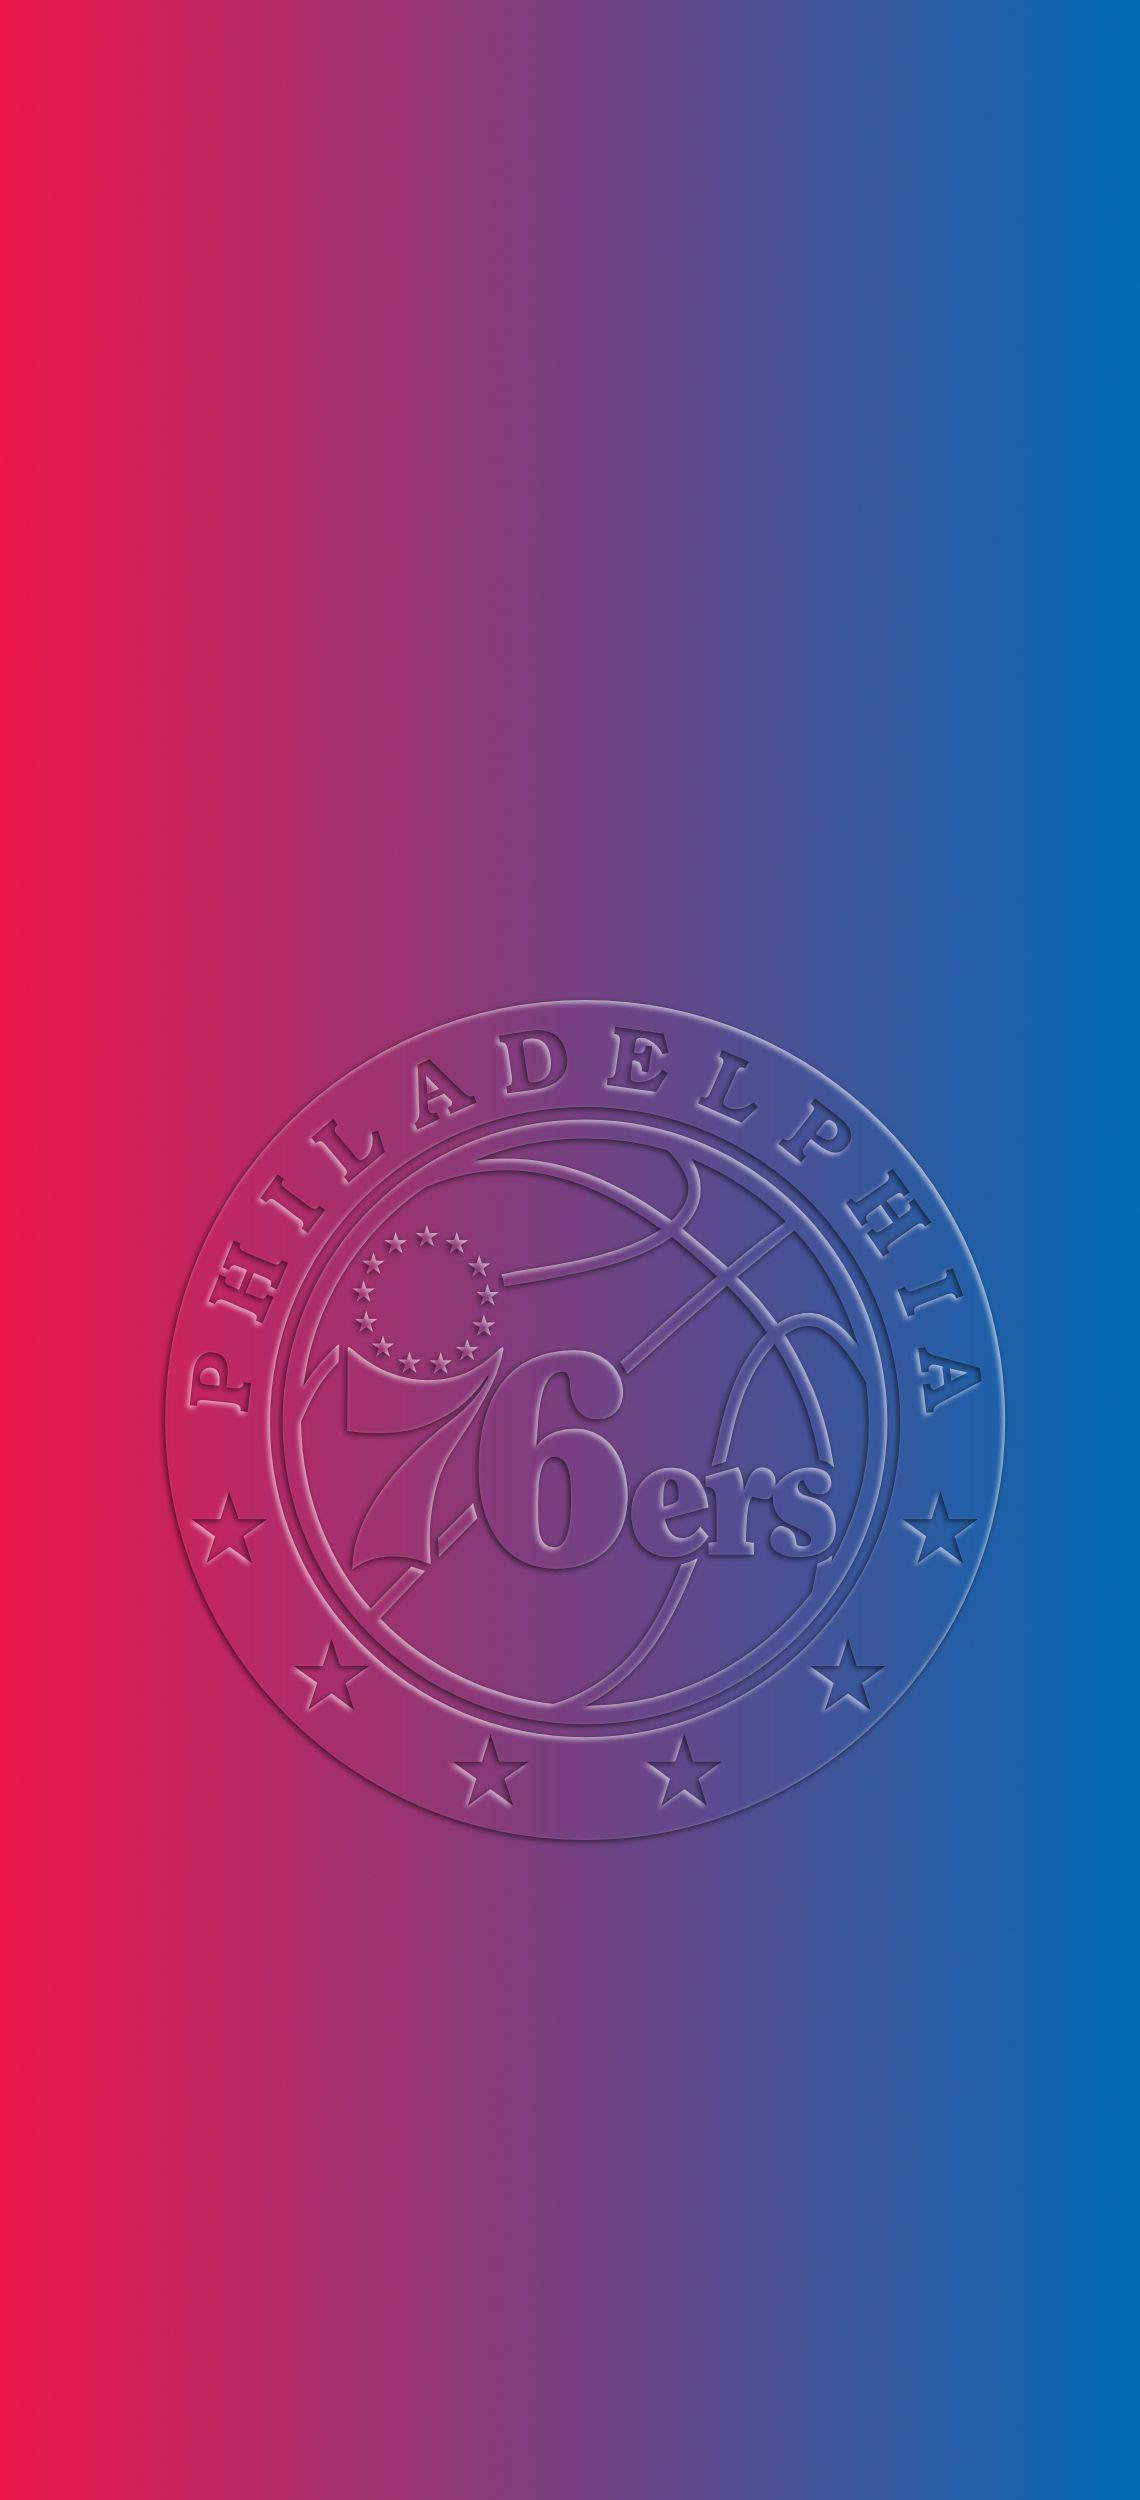 Philadelphia 76ers 3D Wallpaper. Philadelphia 76ers, 76ers, Nba basketball teams